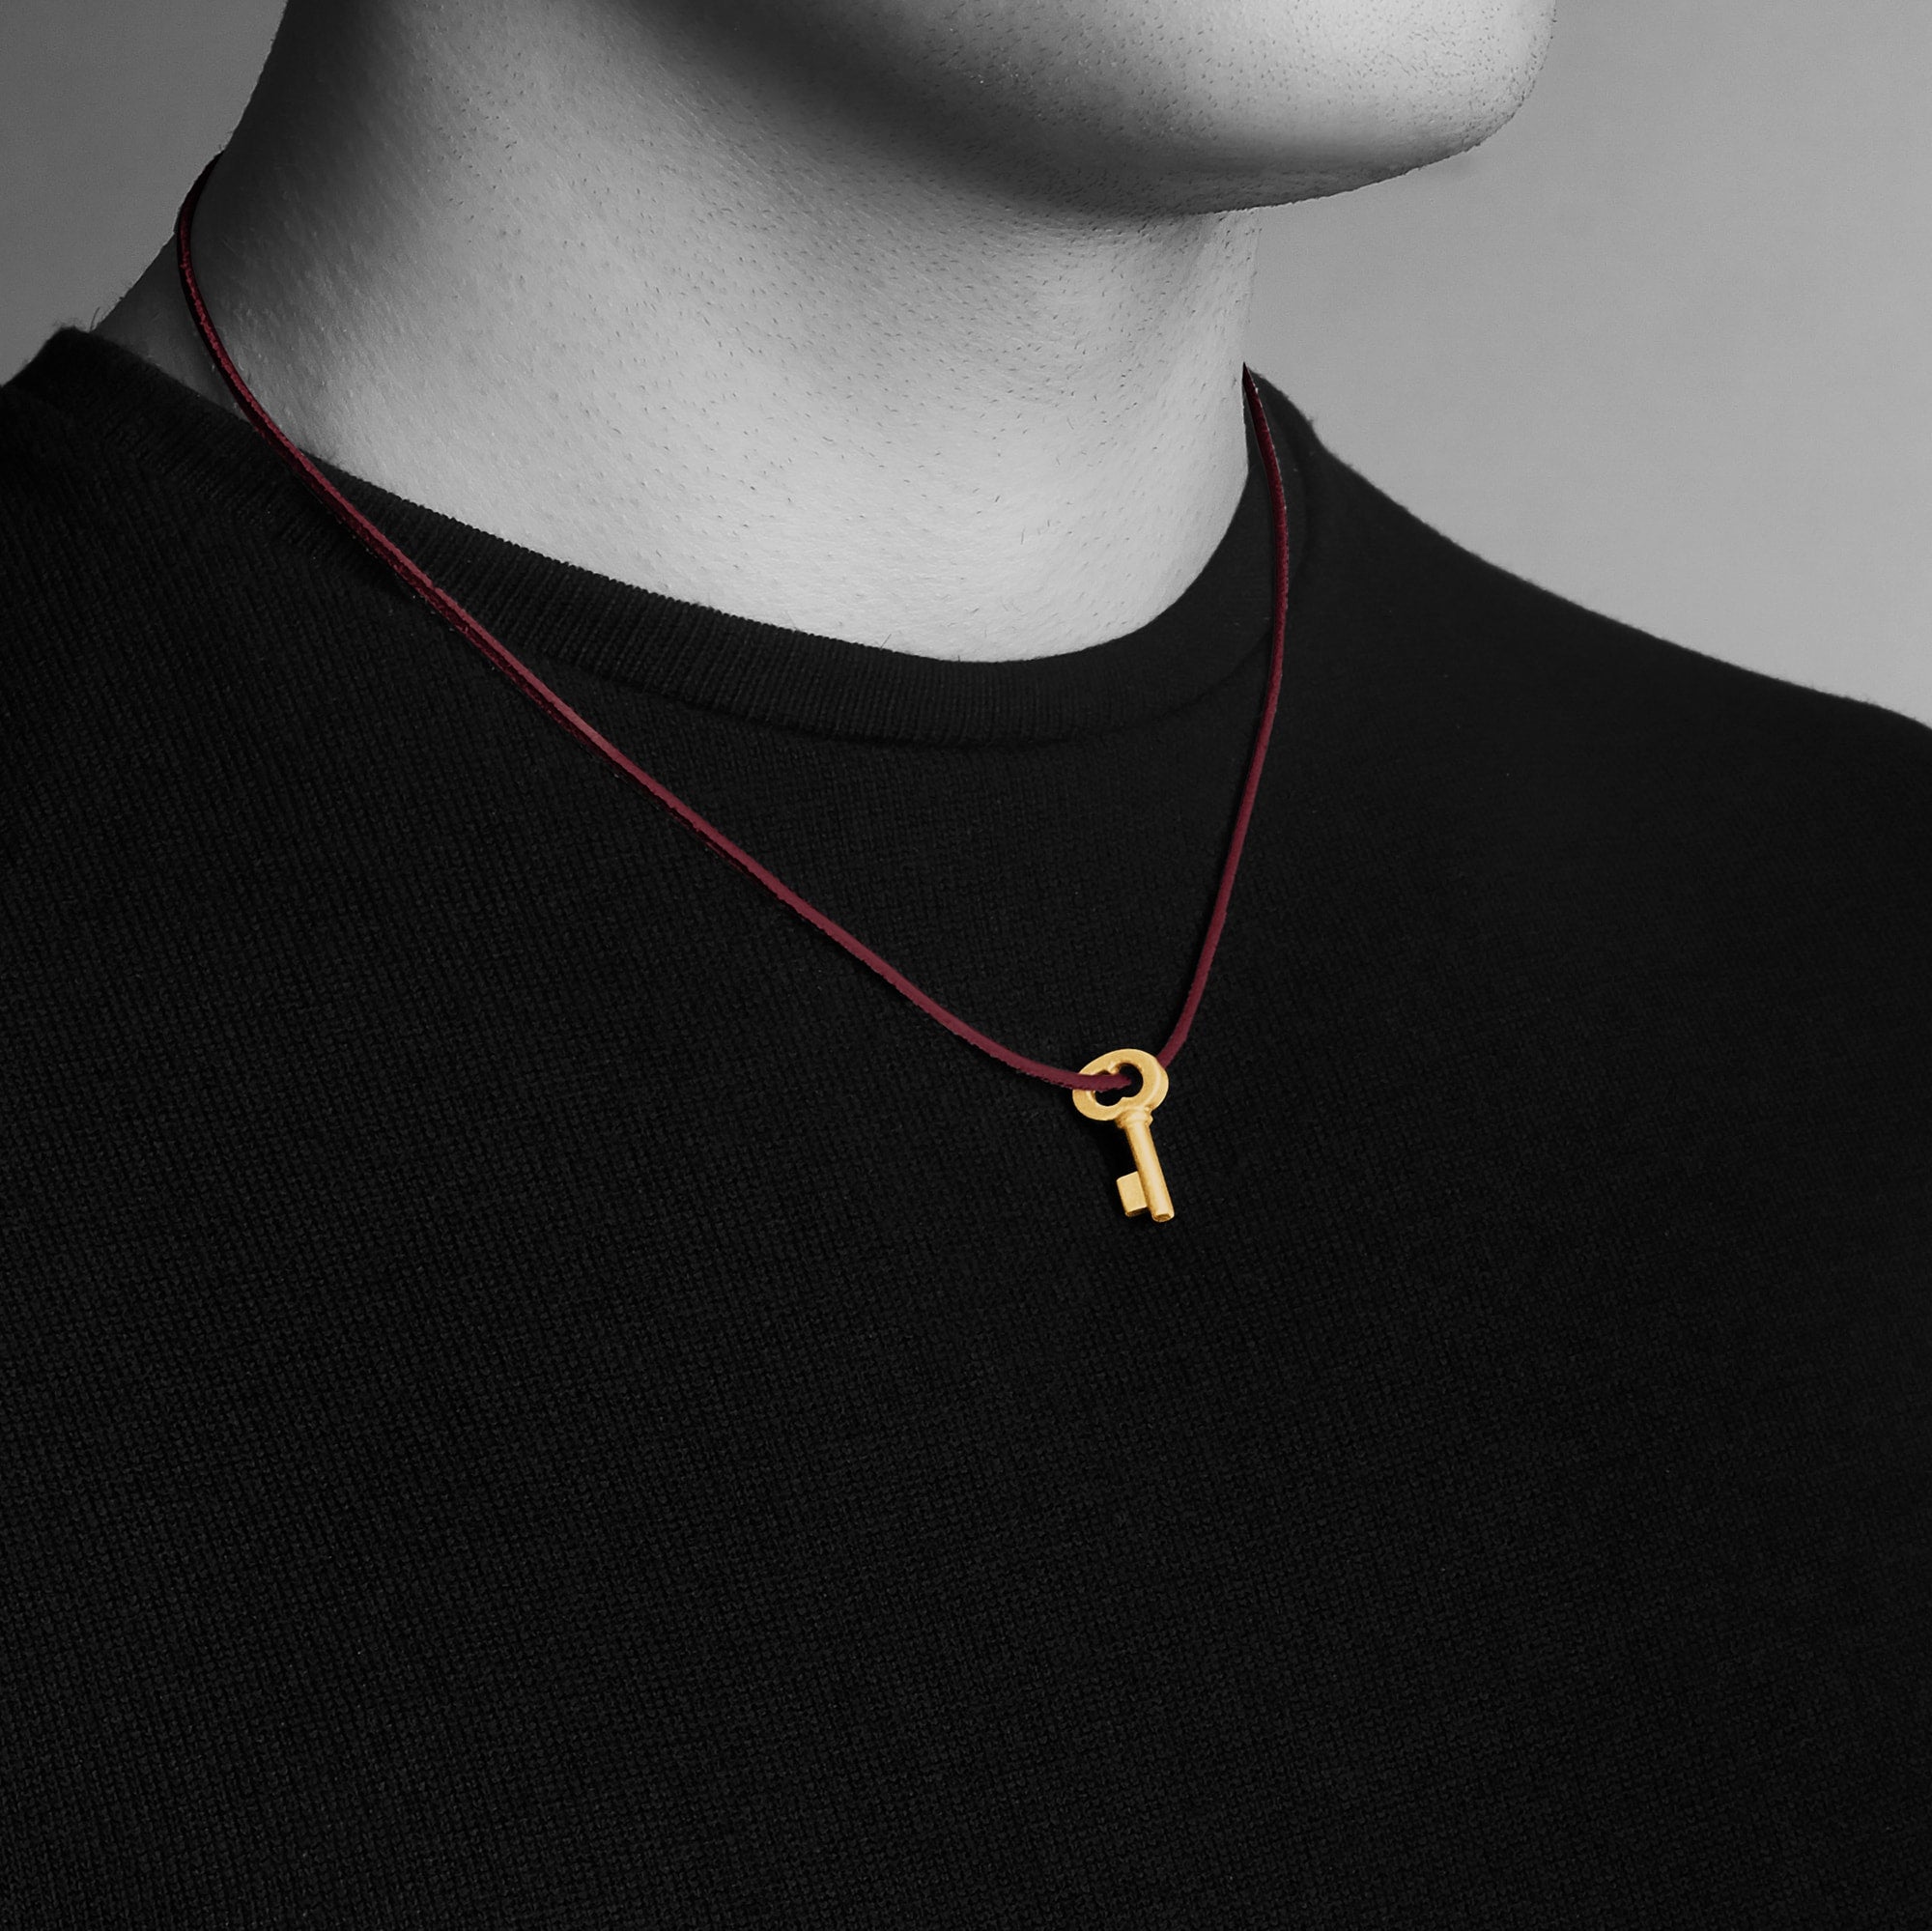 mens key necklace